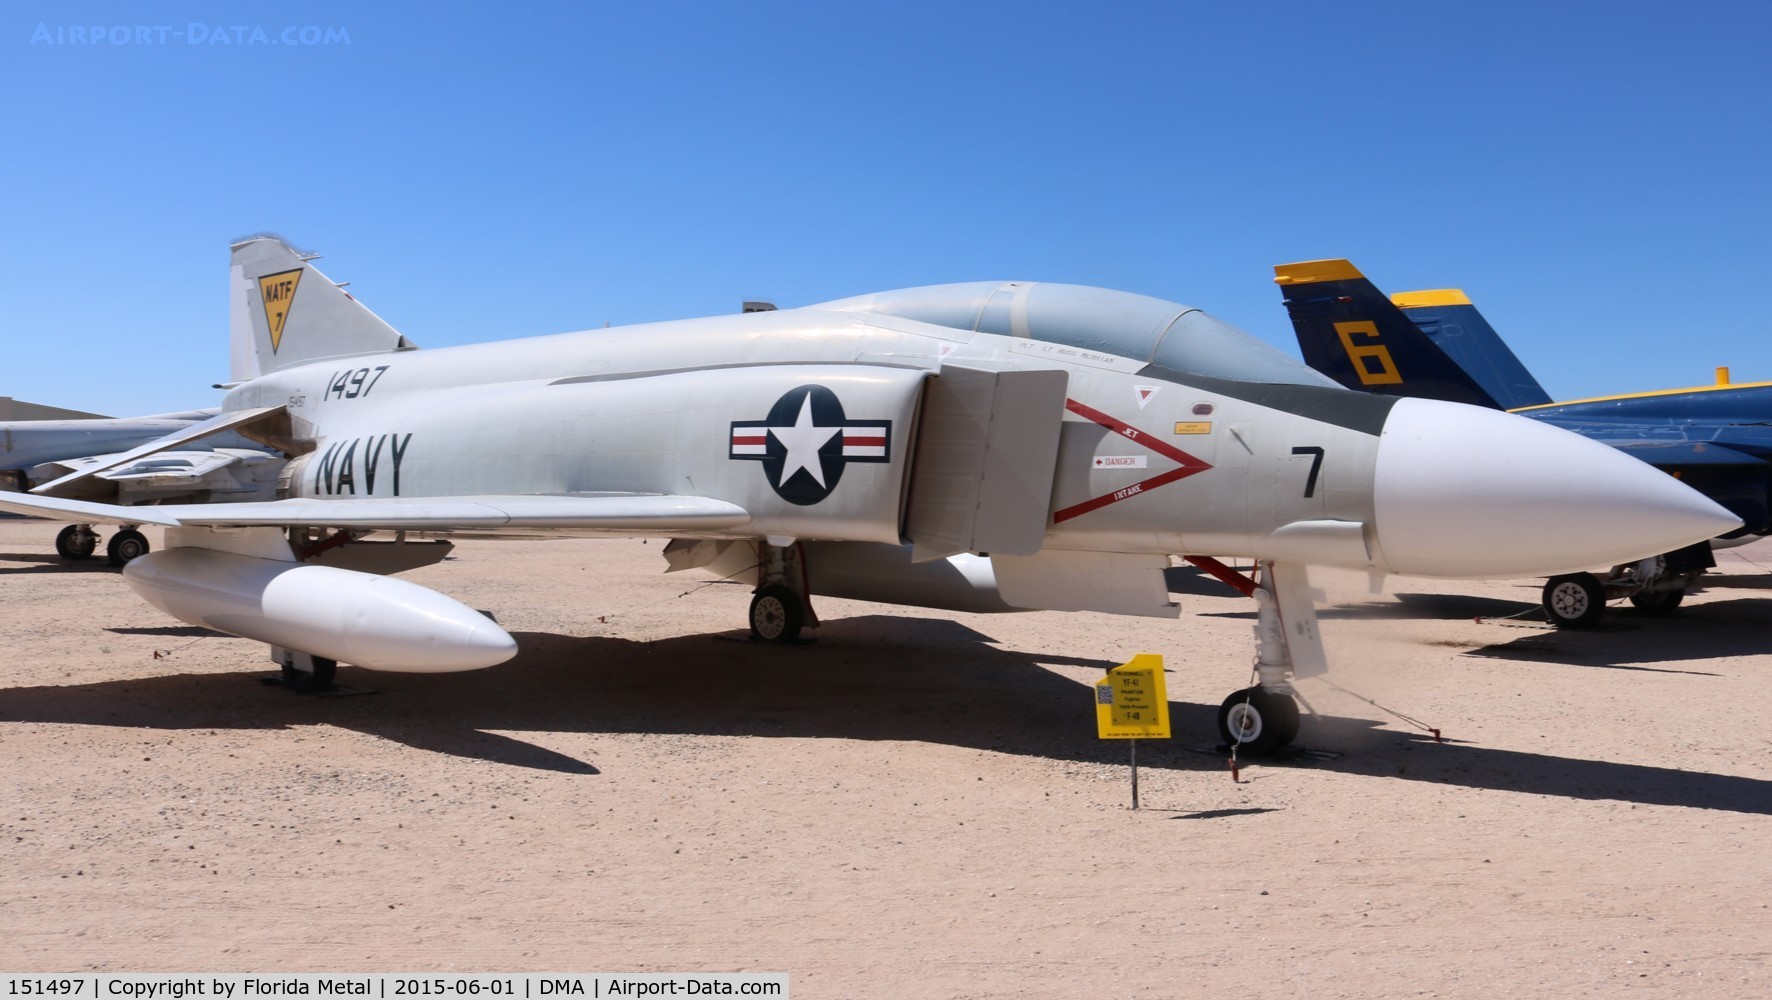 151497, 1964 McDonnell YF-4J Phantom II C/N 655, YF-4J Phantom II